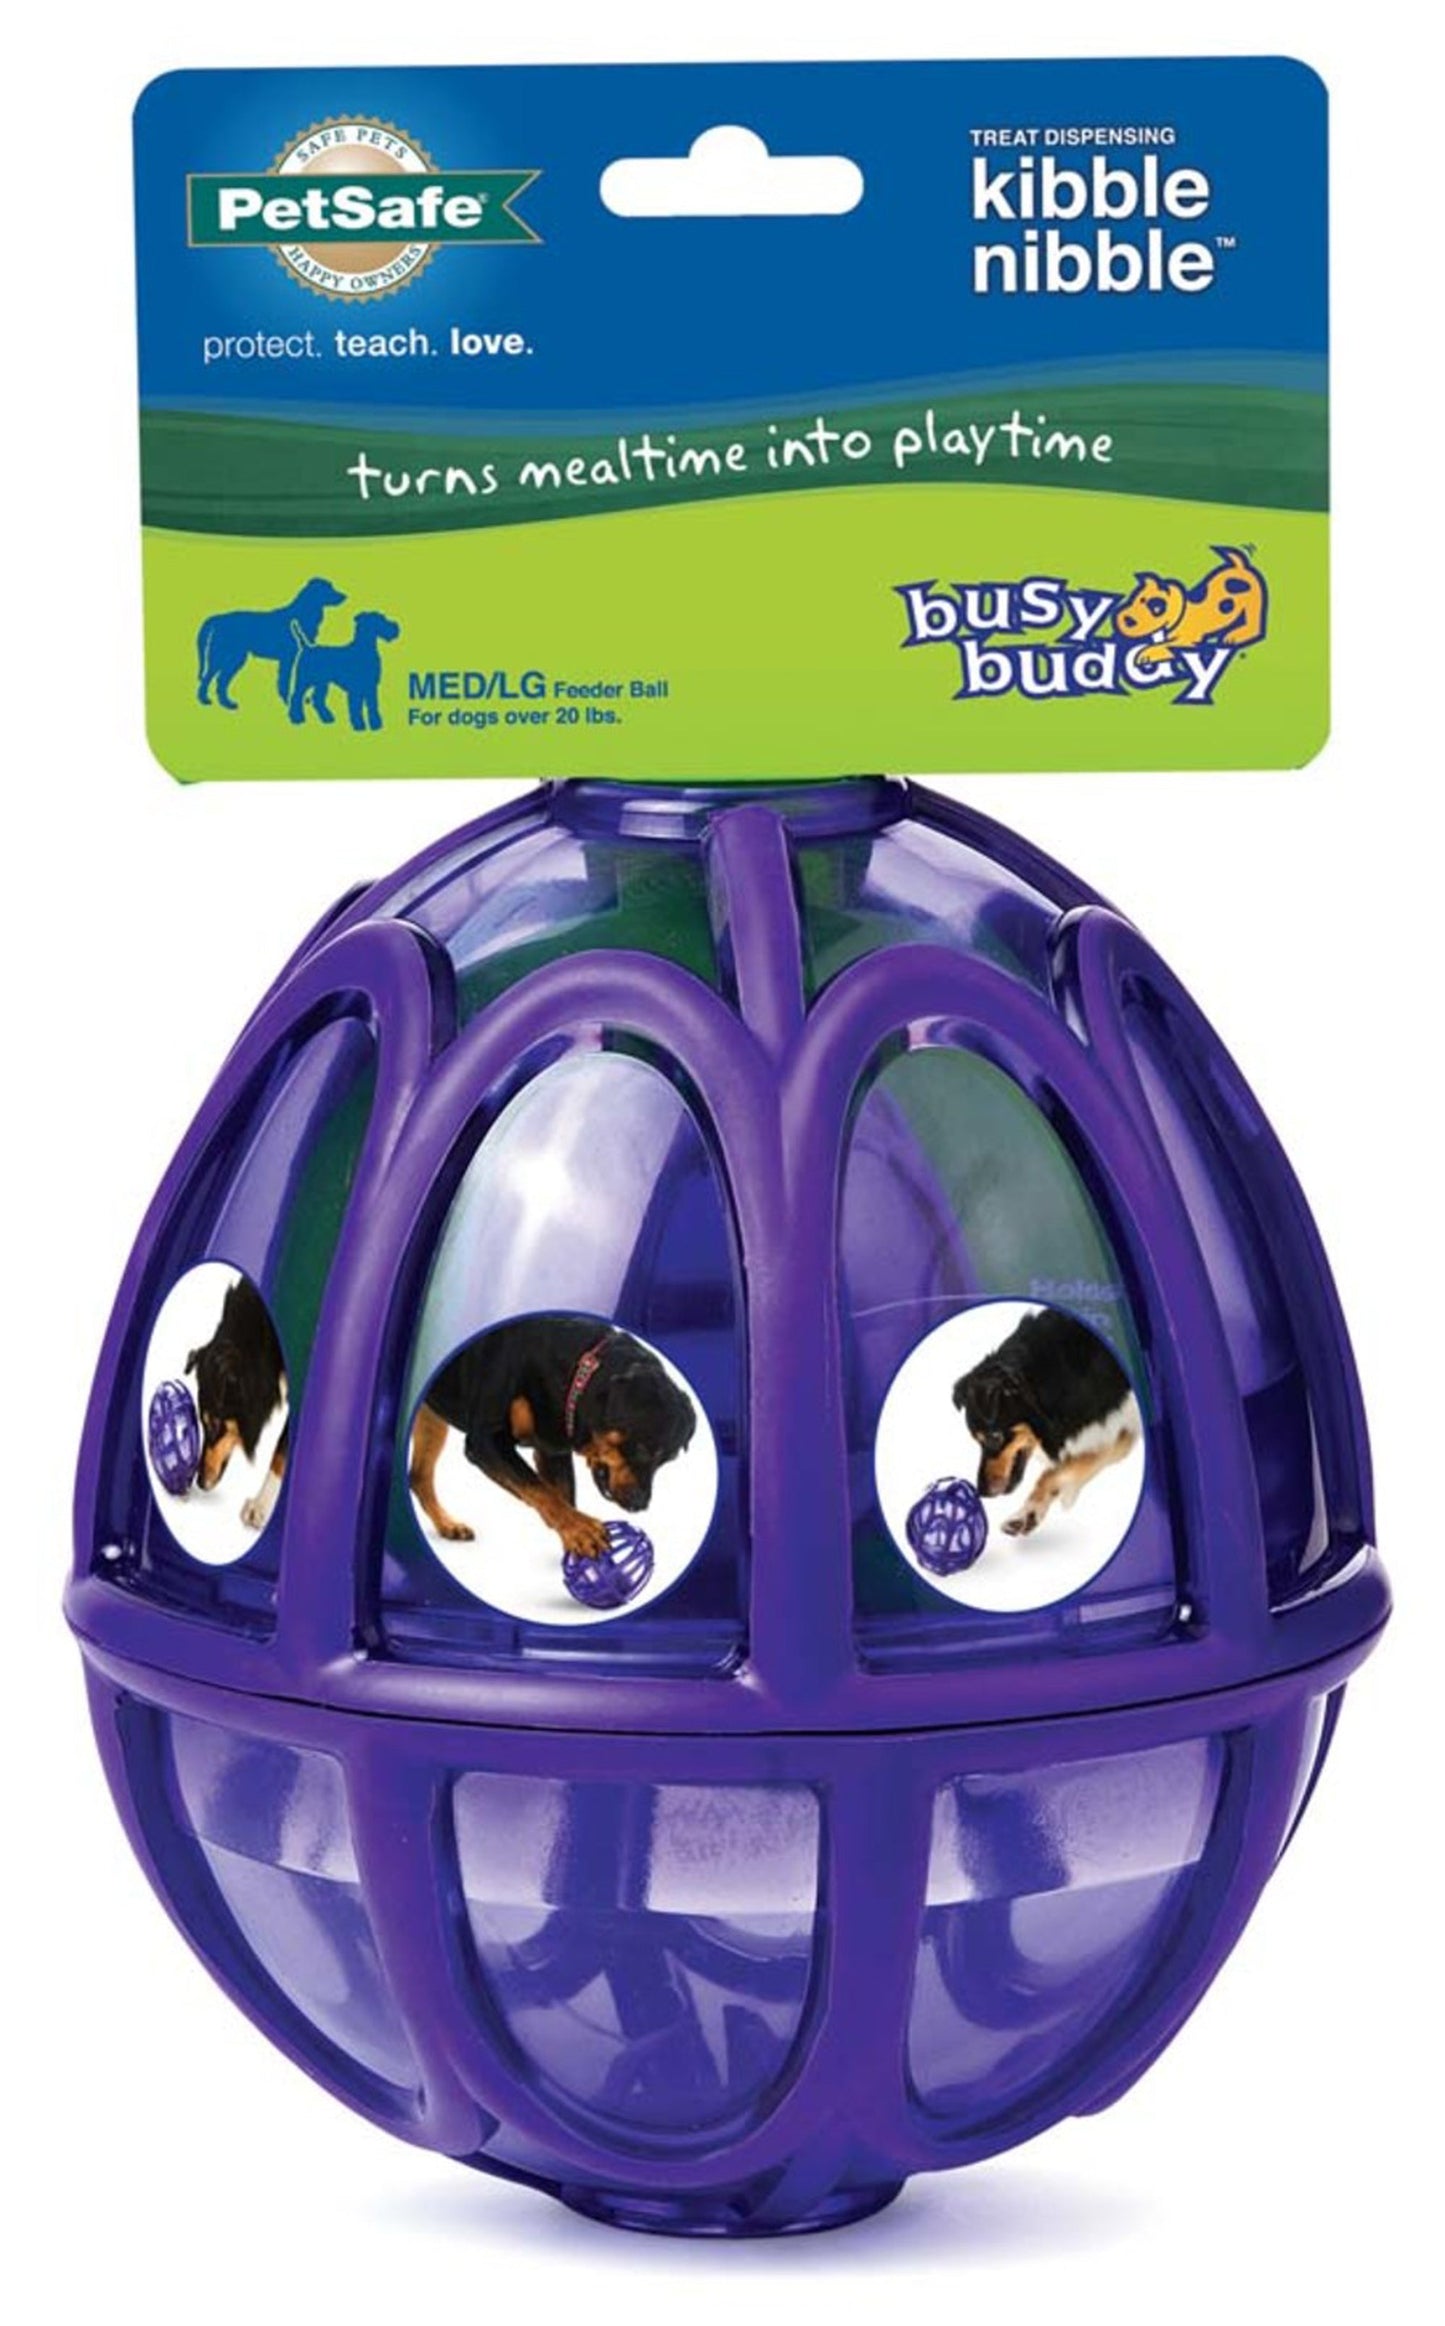 Busy Buddy Dog Toy Kibble Nibble Feeder Ball Purple 1ea/MD/LG